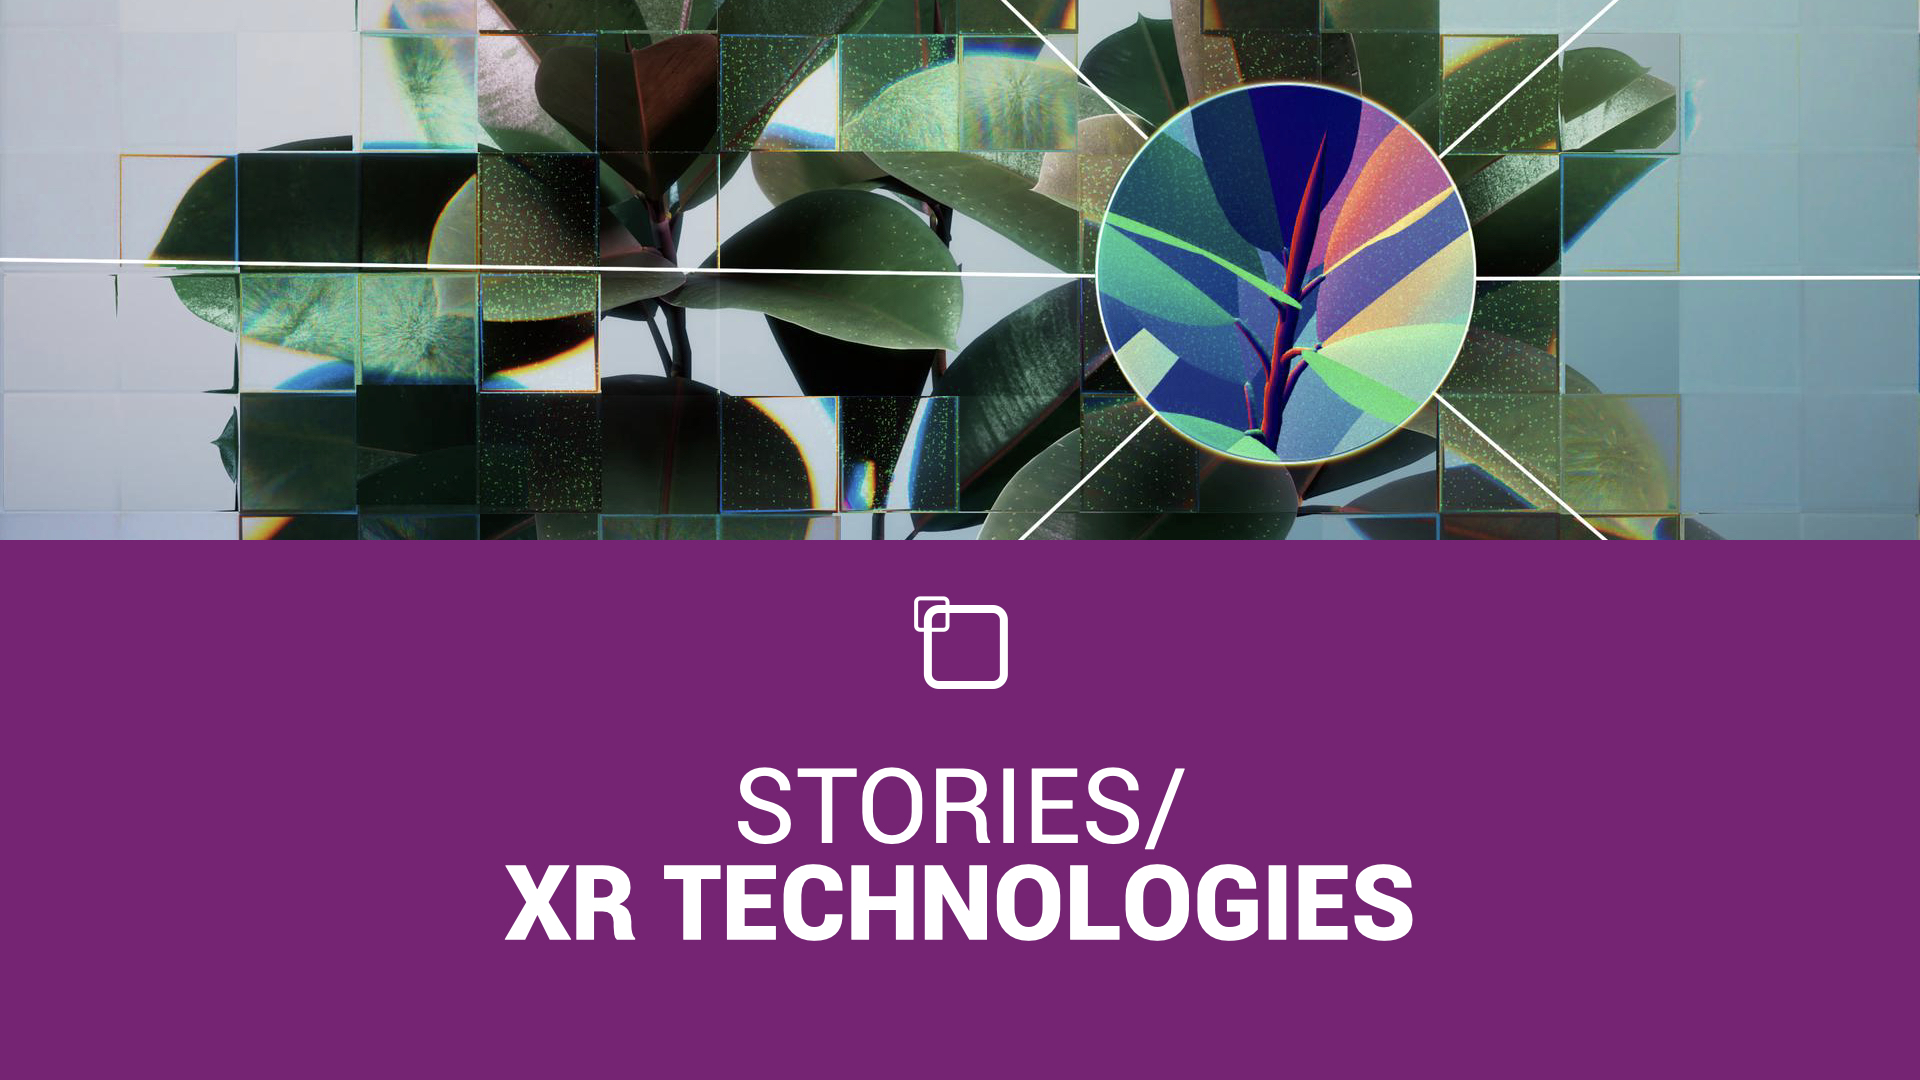 XR Technologies